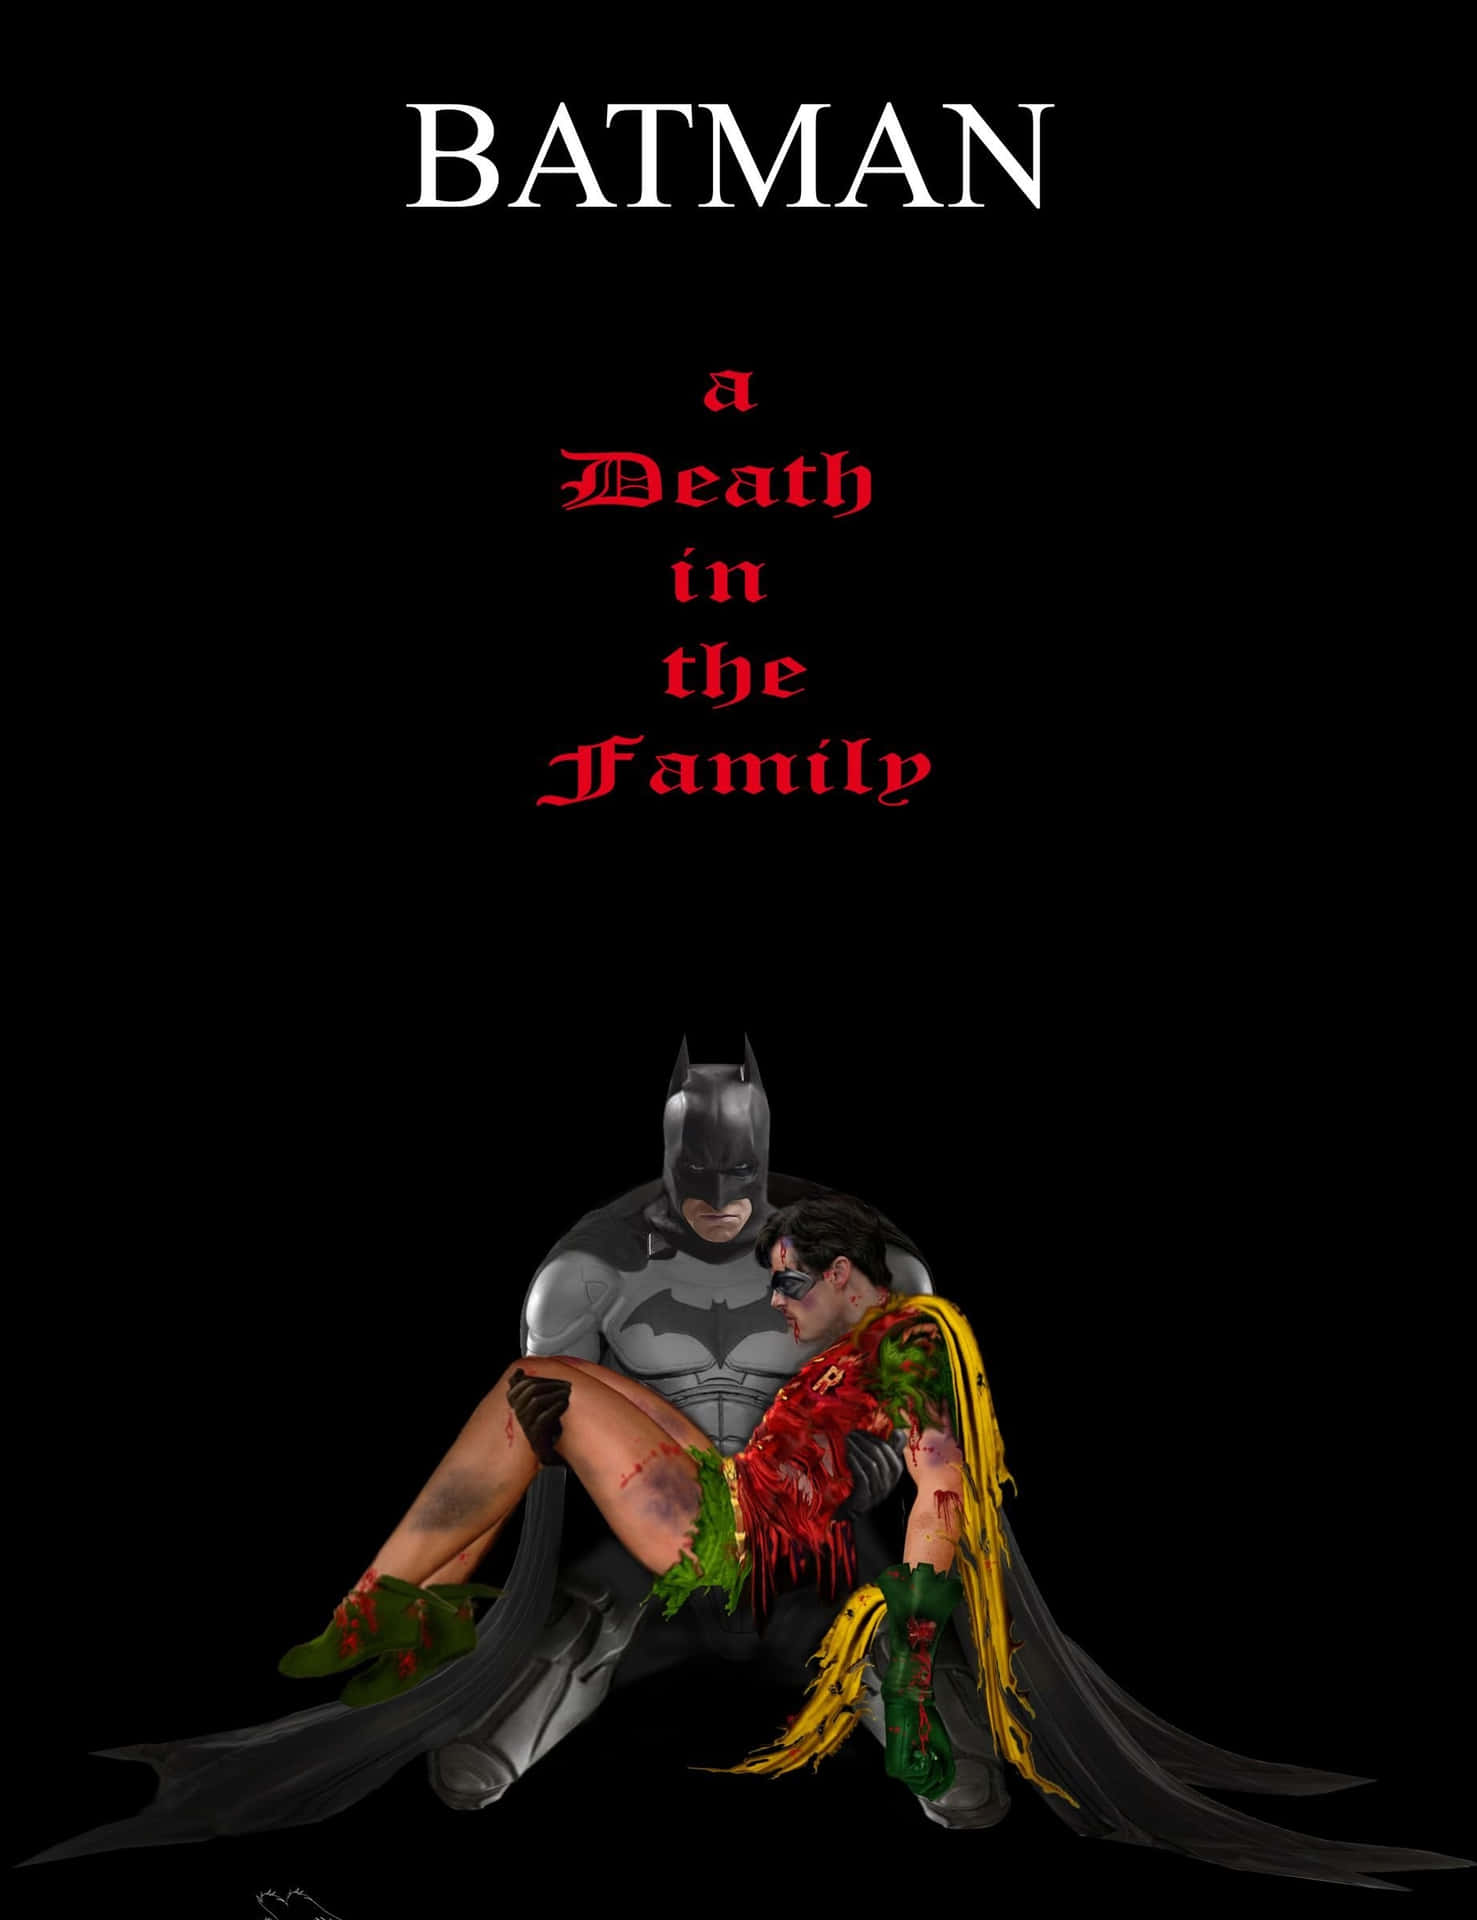 Batman mourns the loss of Robin in 'Batman: Death in the Family' Wallpaper